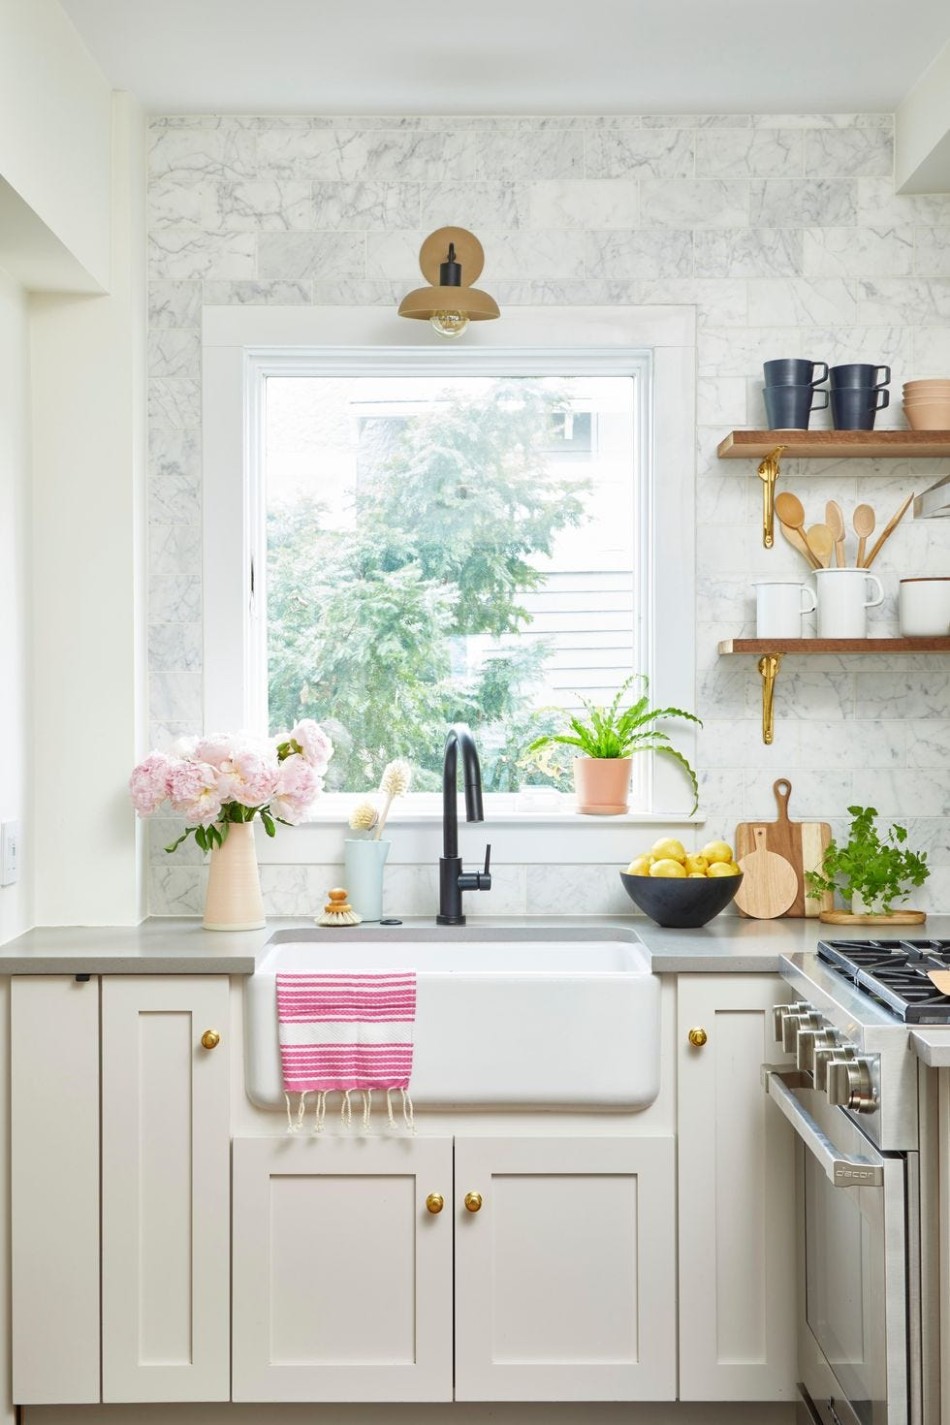 6 Best Small Kitchen Design Ideas - Tiny Kitchen Decorating - decorate small kitchen